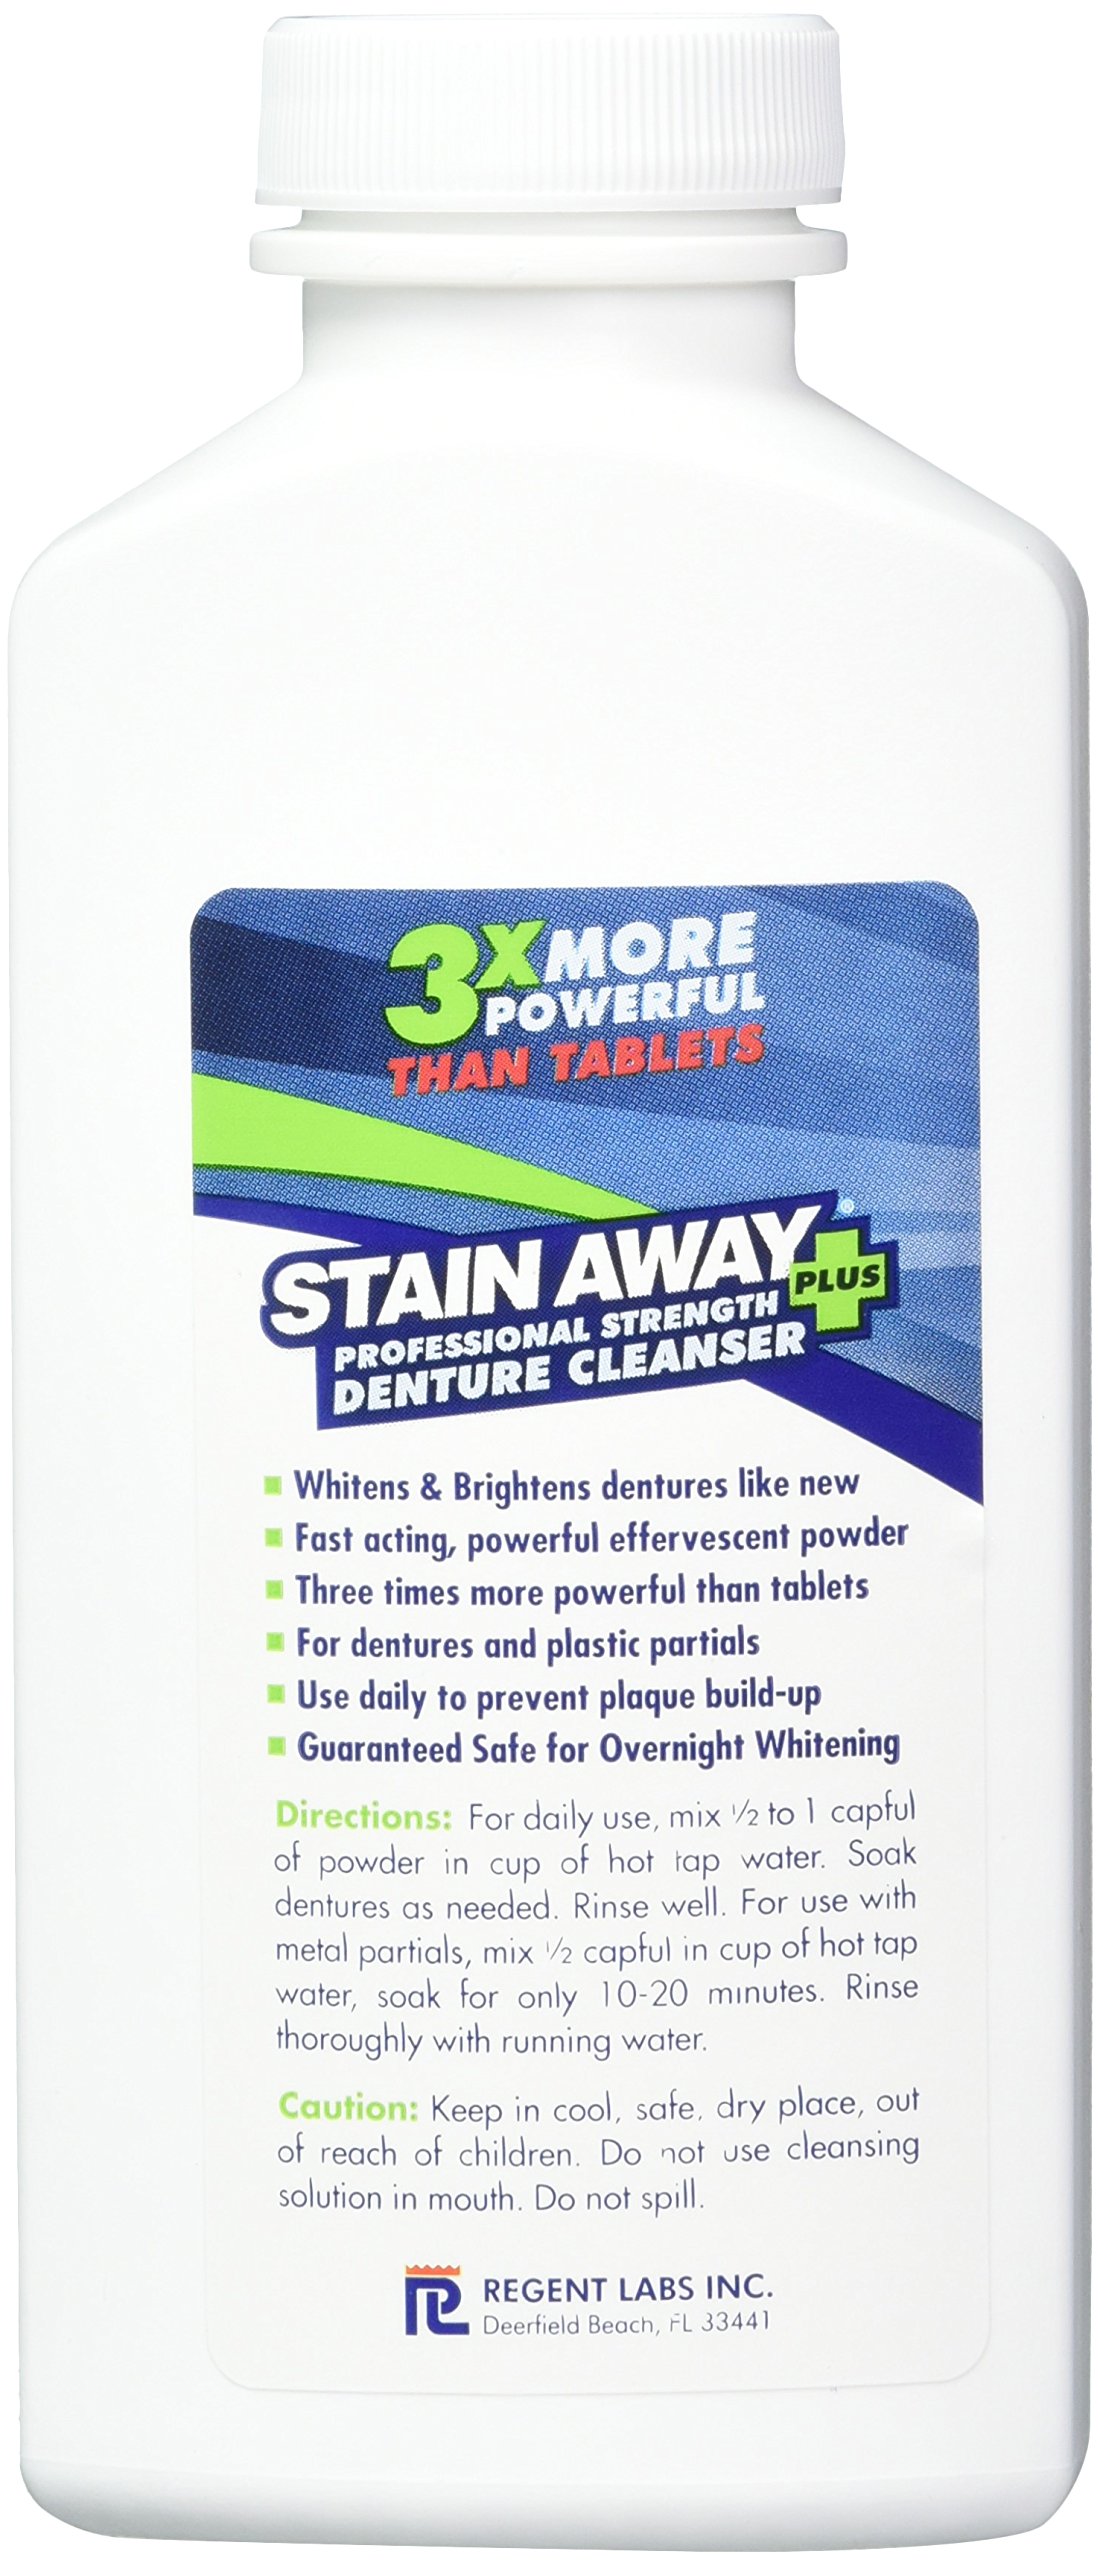 Stain Away Plus Denture Cleanser 8.1 oz bottle (Pack of 2)